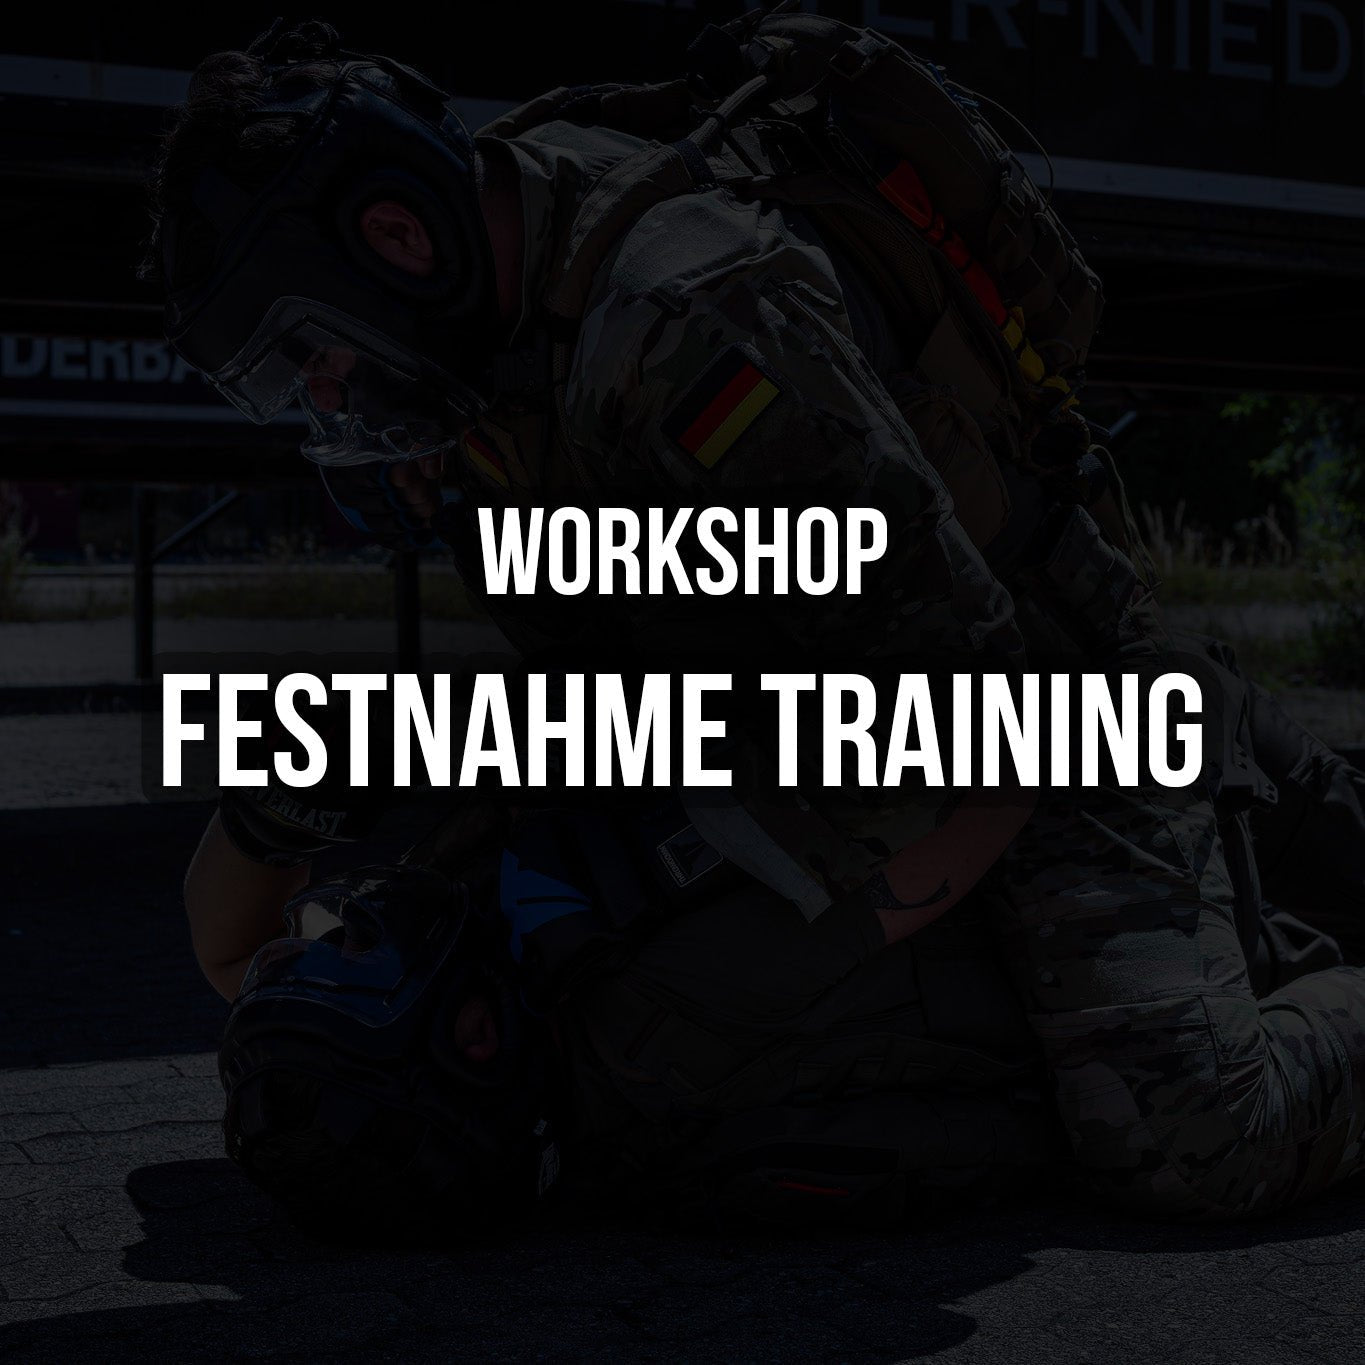 Workshop Festnahme Training NRW - PPF Germany